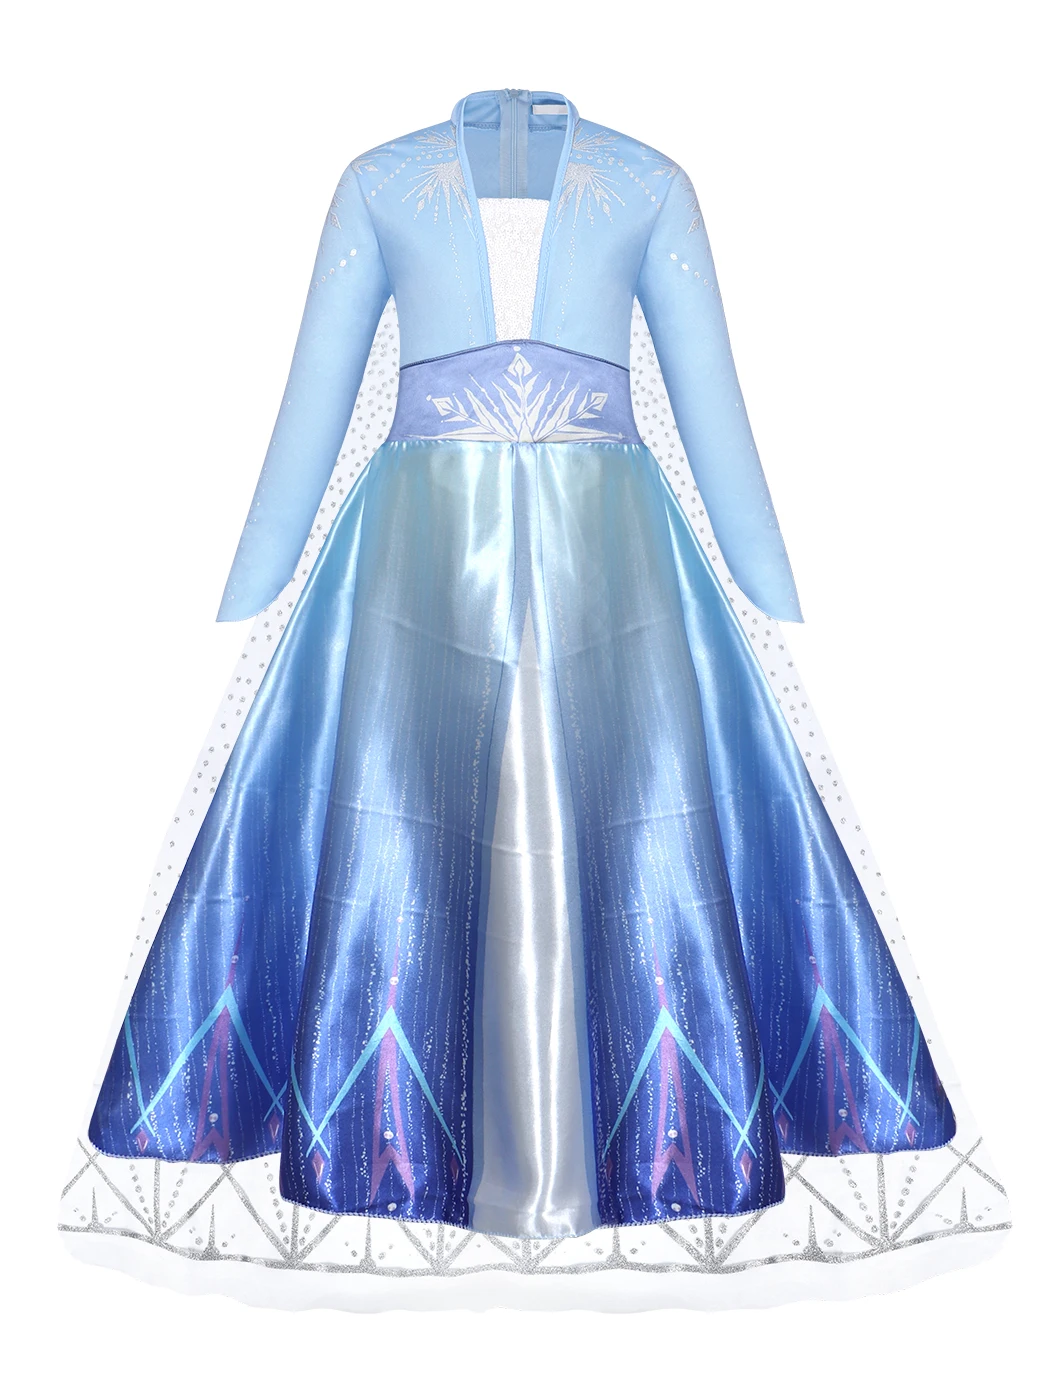 HOT Kids Girls Elsa Frozen Dress Costume Princess Anna Party Dresses Cosplay US 